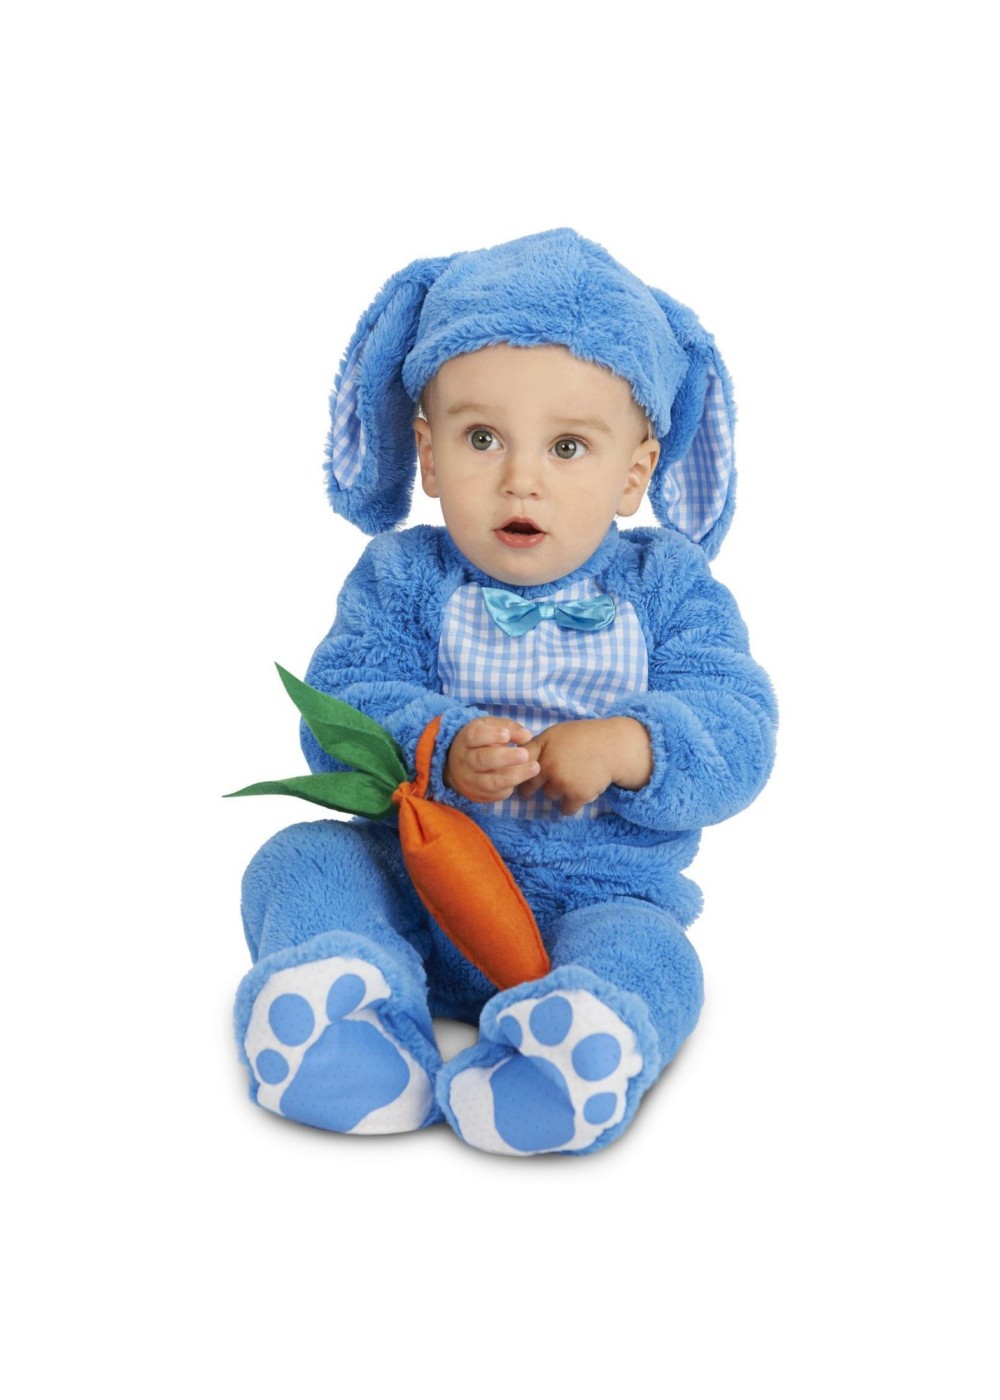 Blue Bunny Baby Boys Costume